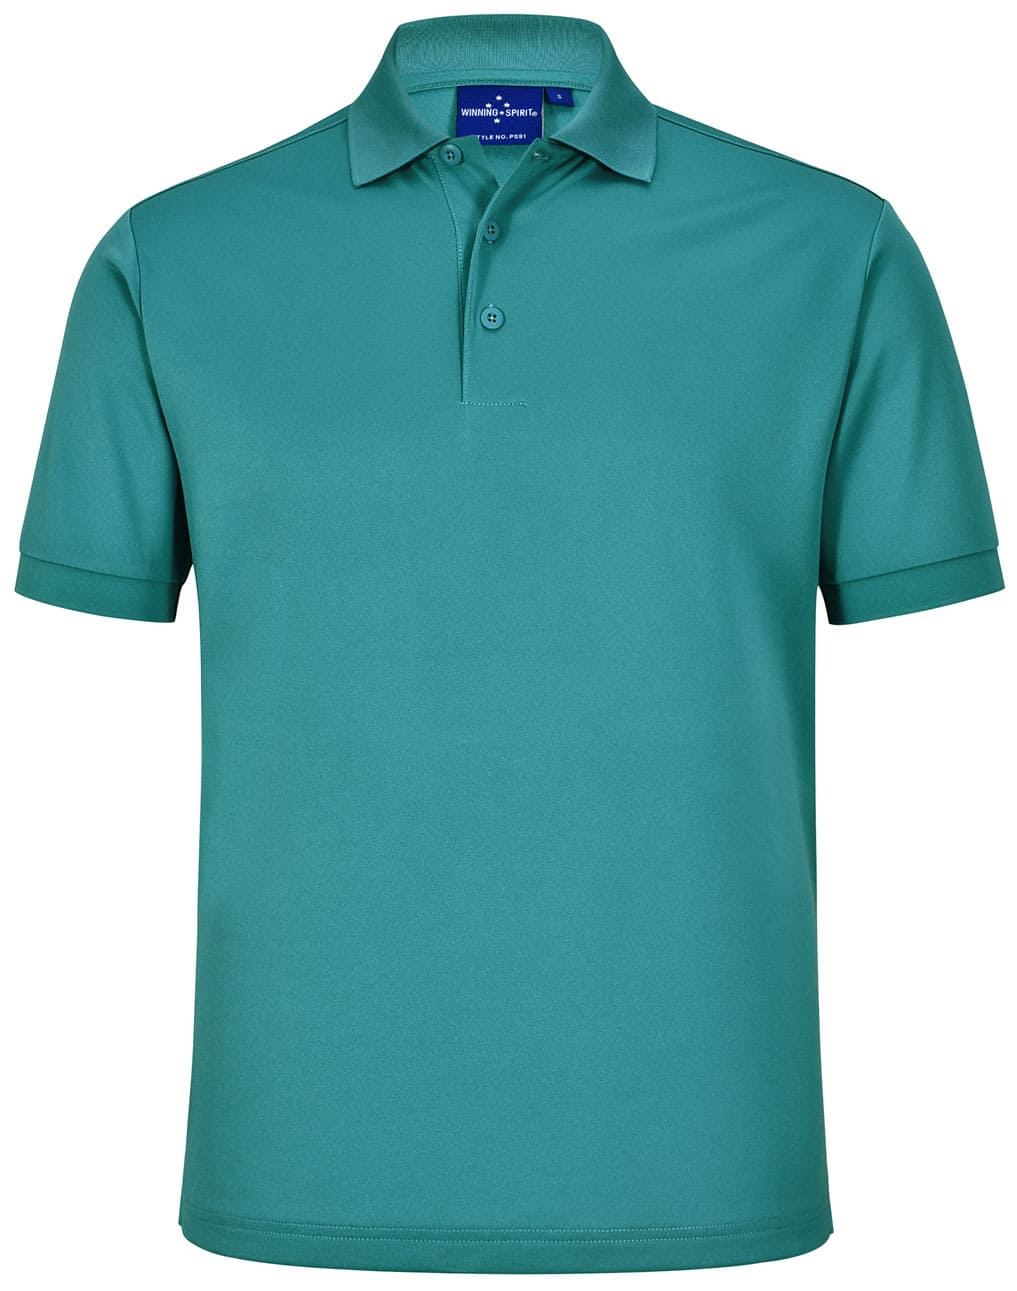 Custom Mens (Ash) Corporate Branded Polo Shirts Online Perth Australia